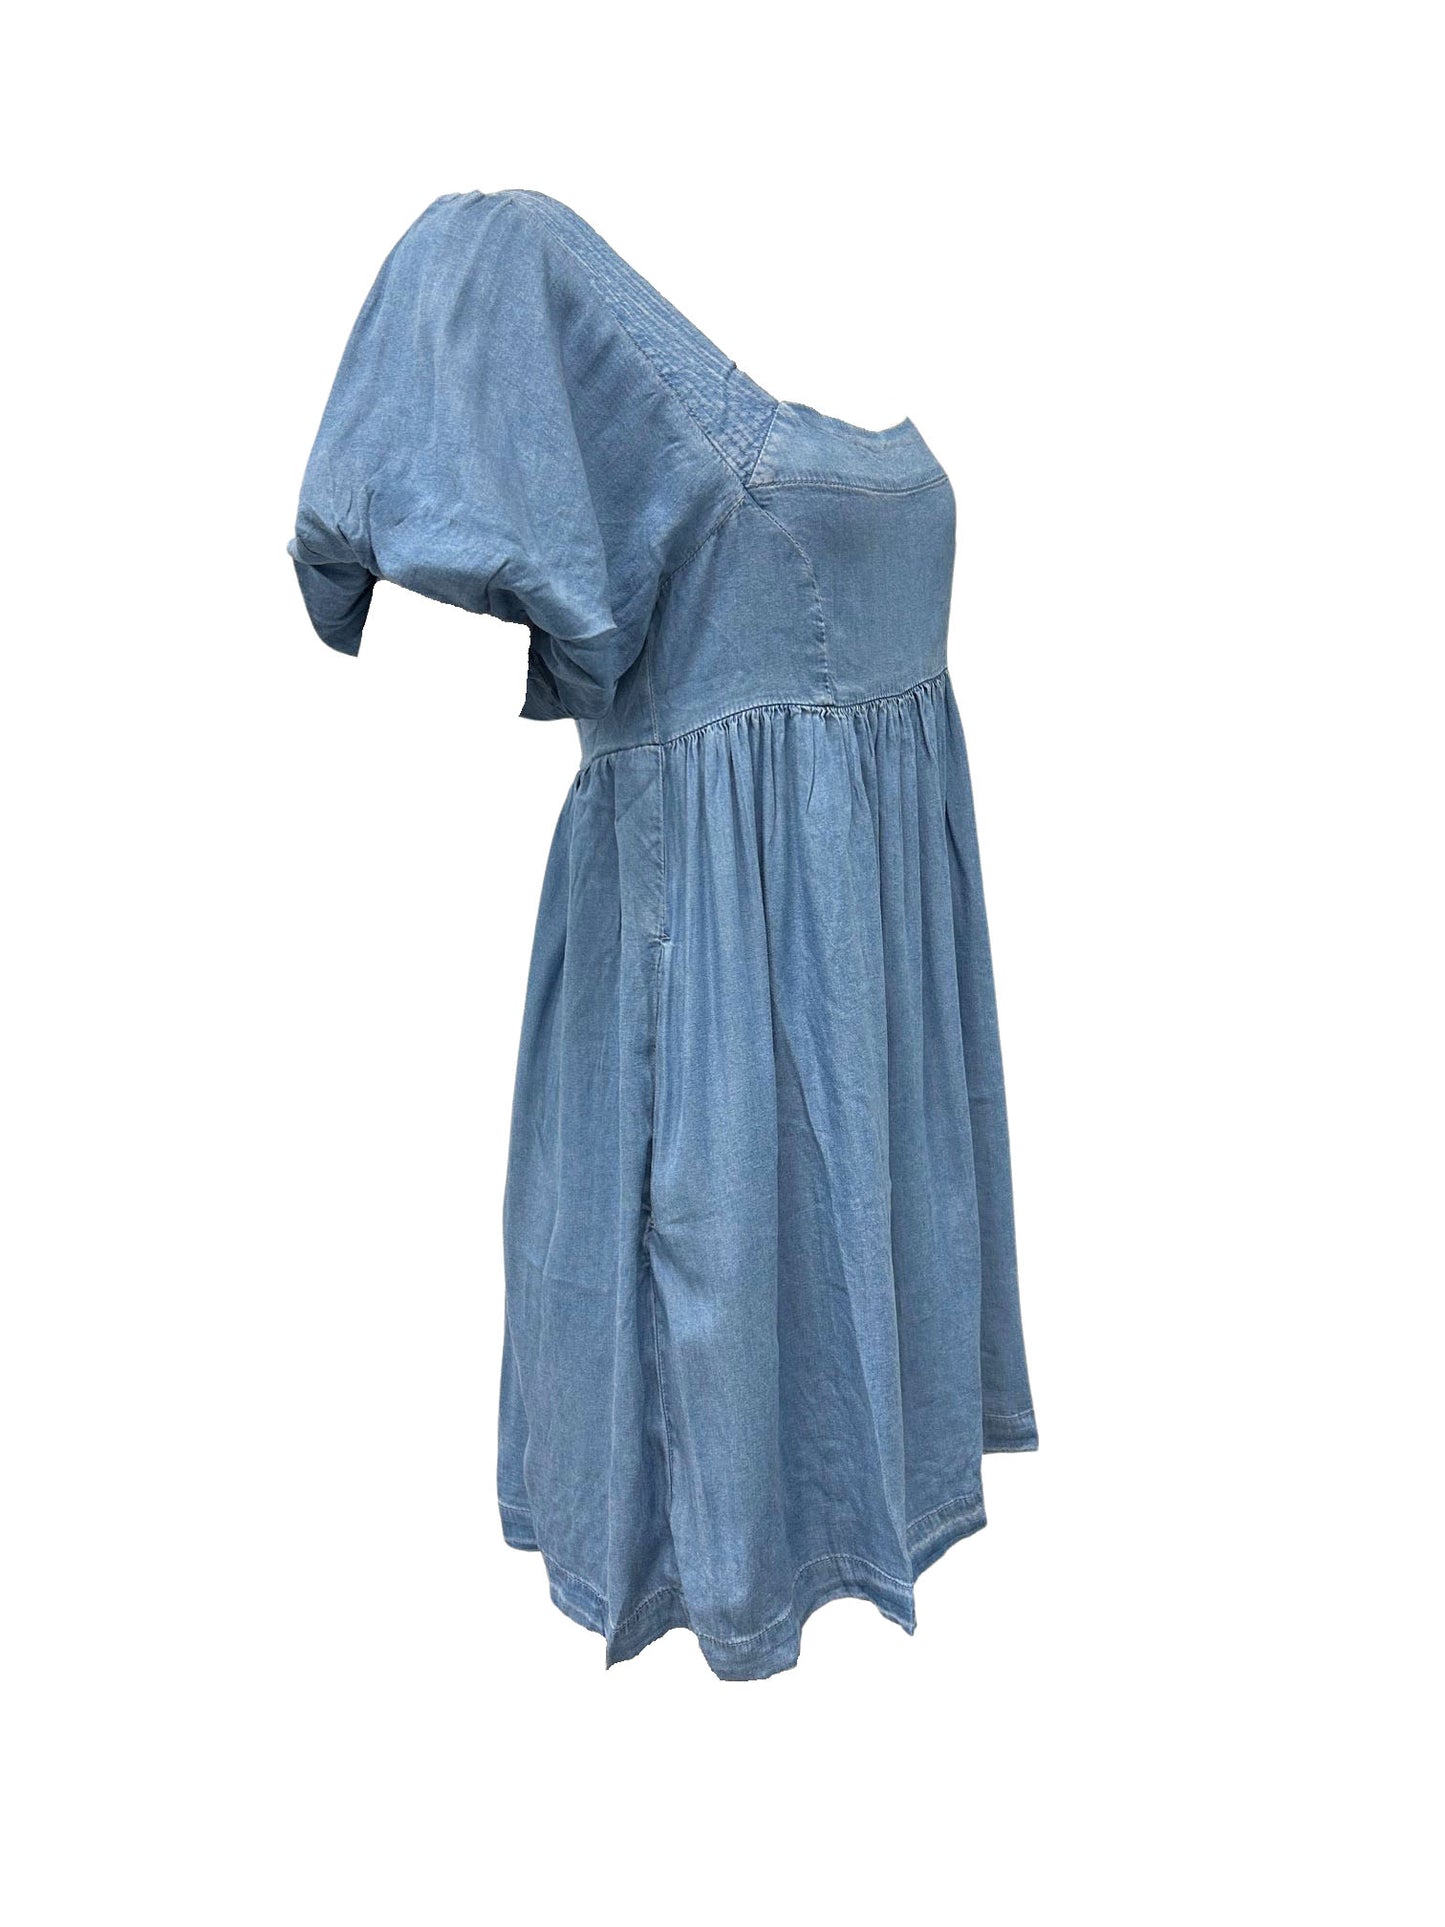 Square Neck Bubble Sleeve Babydoll Mini Dress With Pockets - Denim Blue